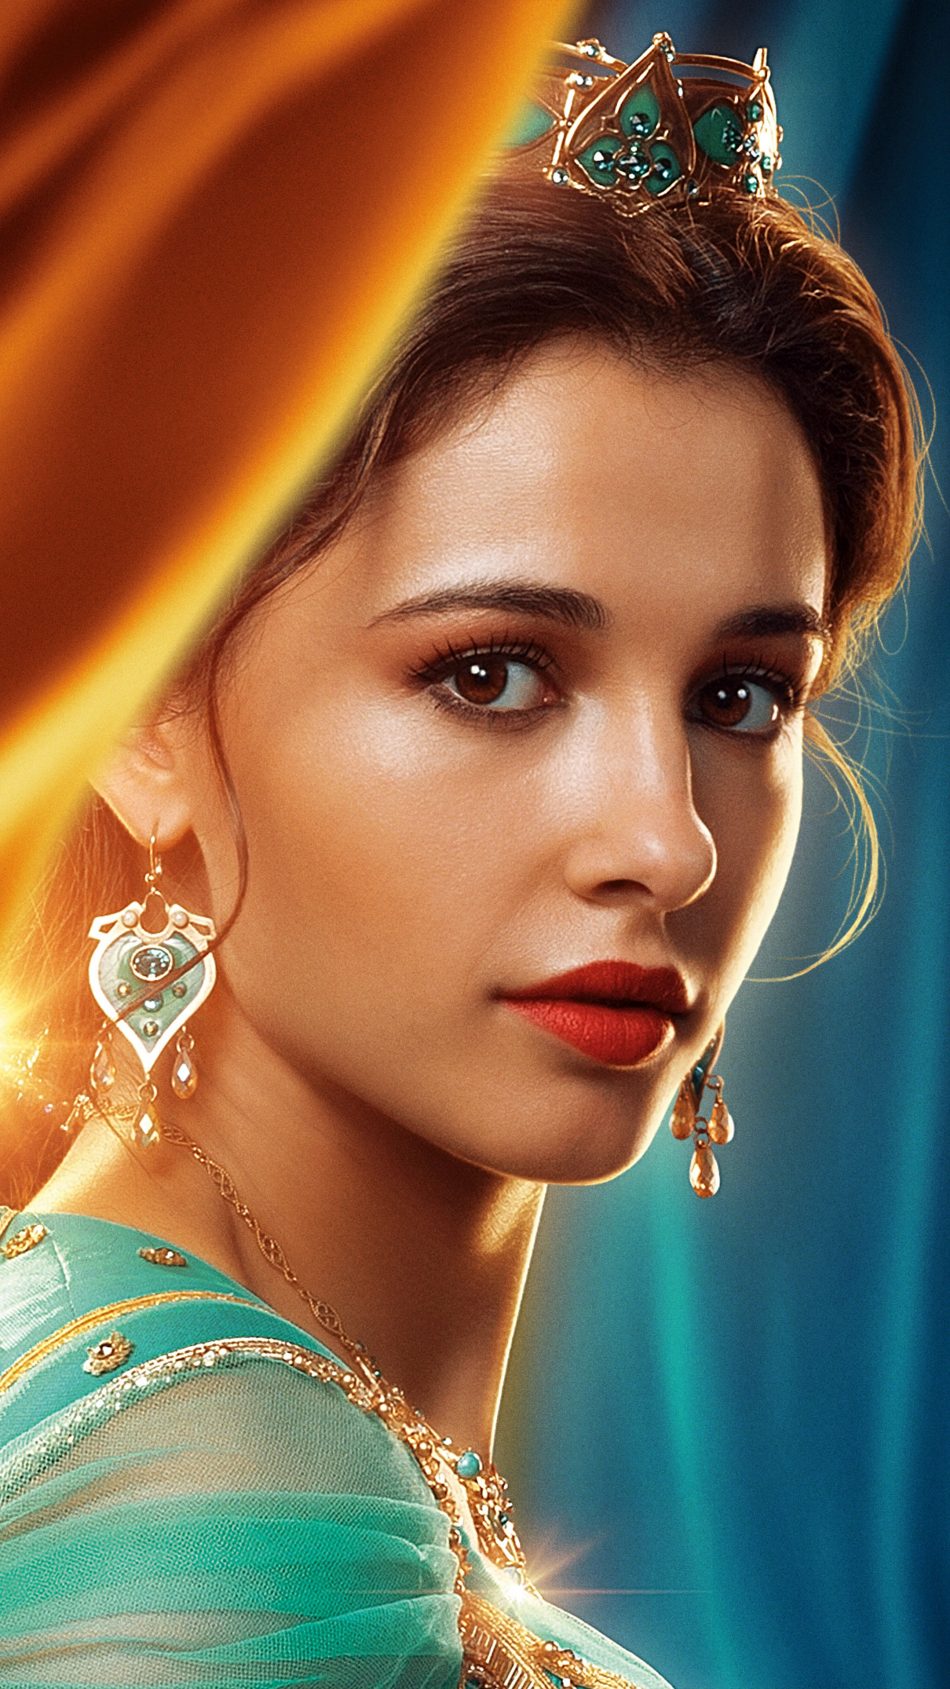 Princess Jasmine In Aladdin 2019 4K Ultra HD Mobile Wallpaper 950x1689 